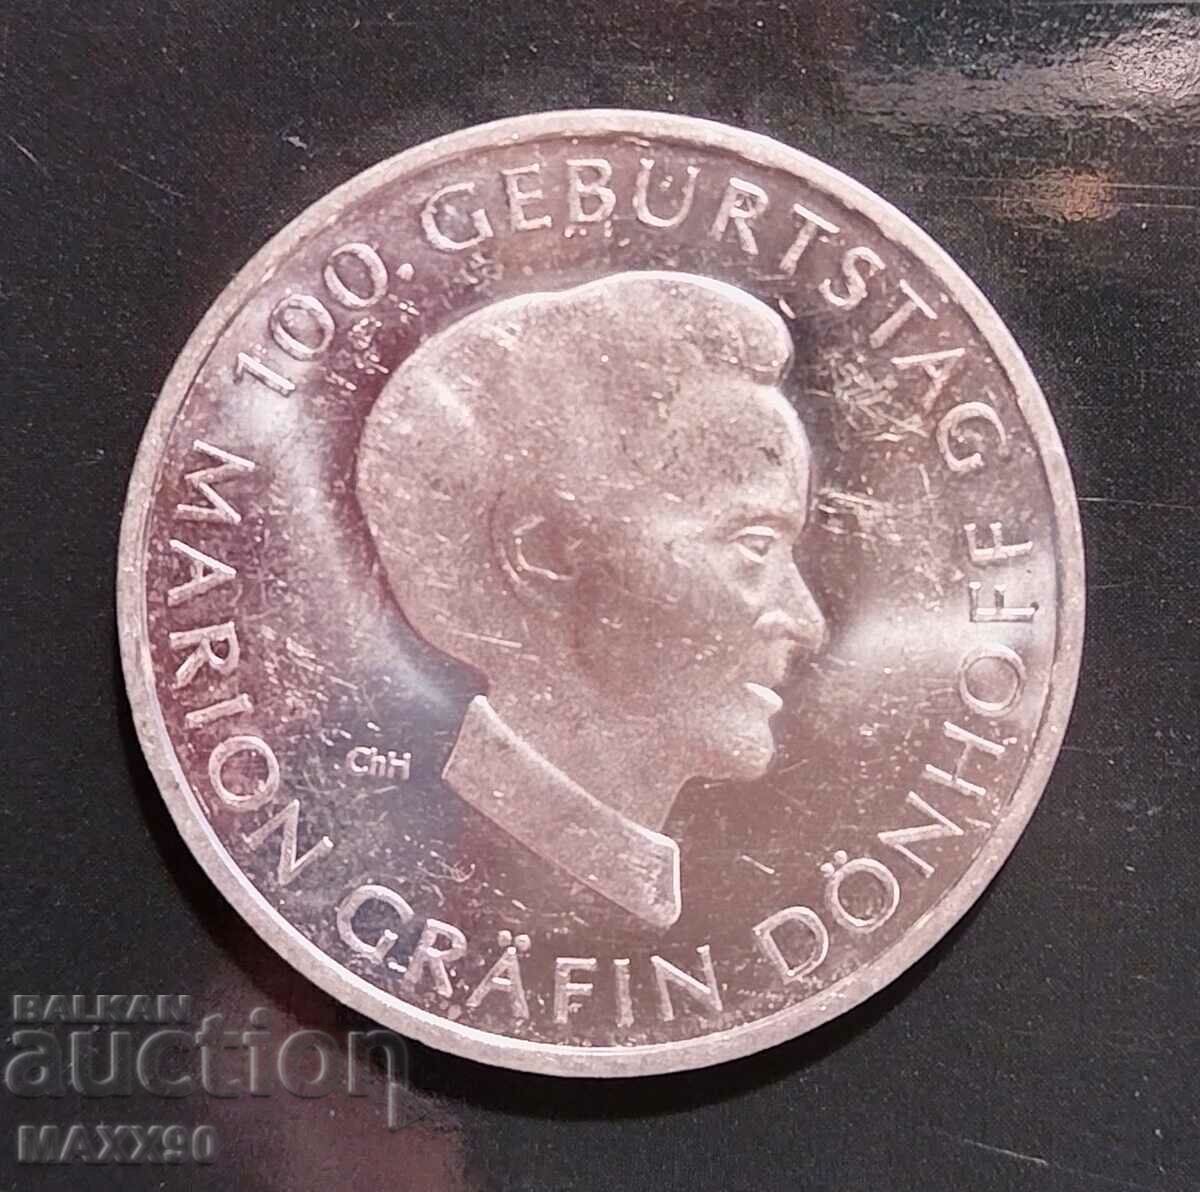 10 euro argint Germania Marion Dönhoff